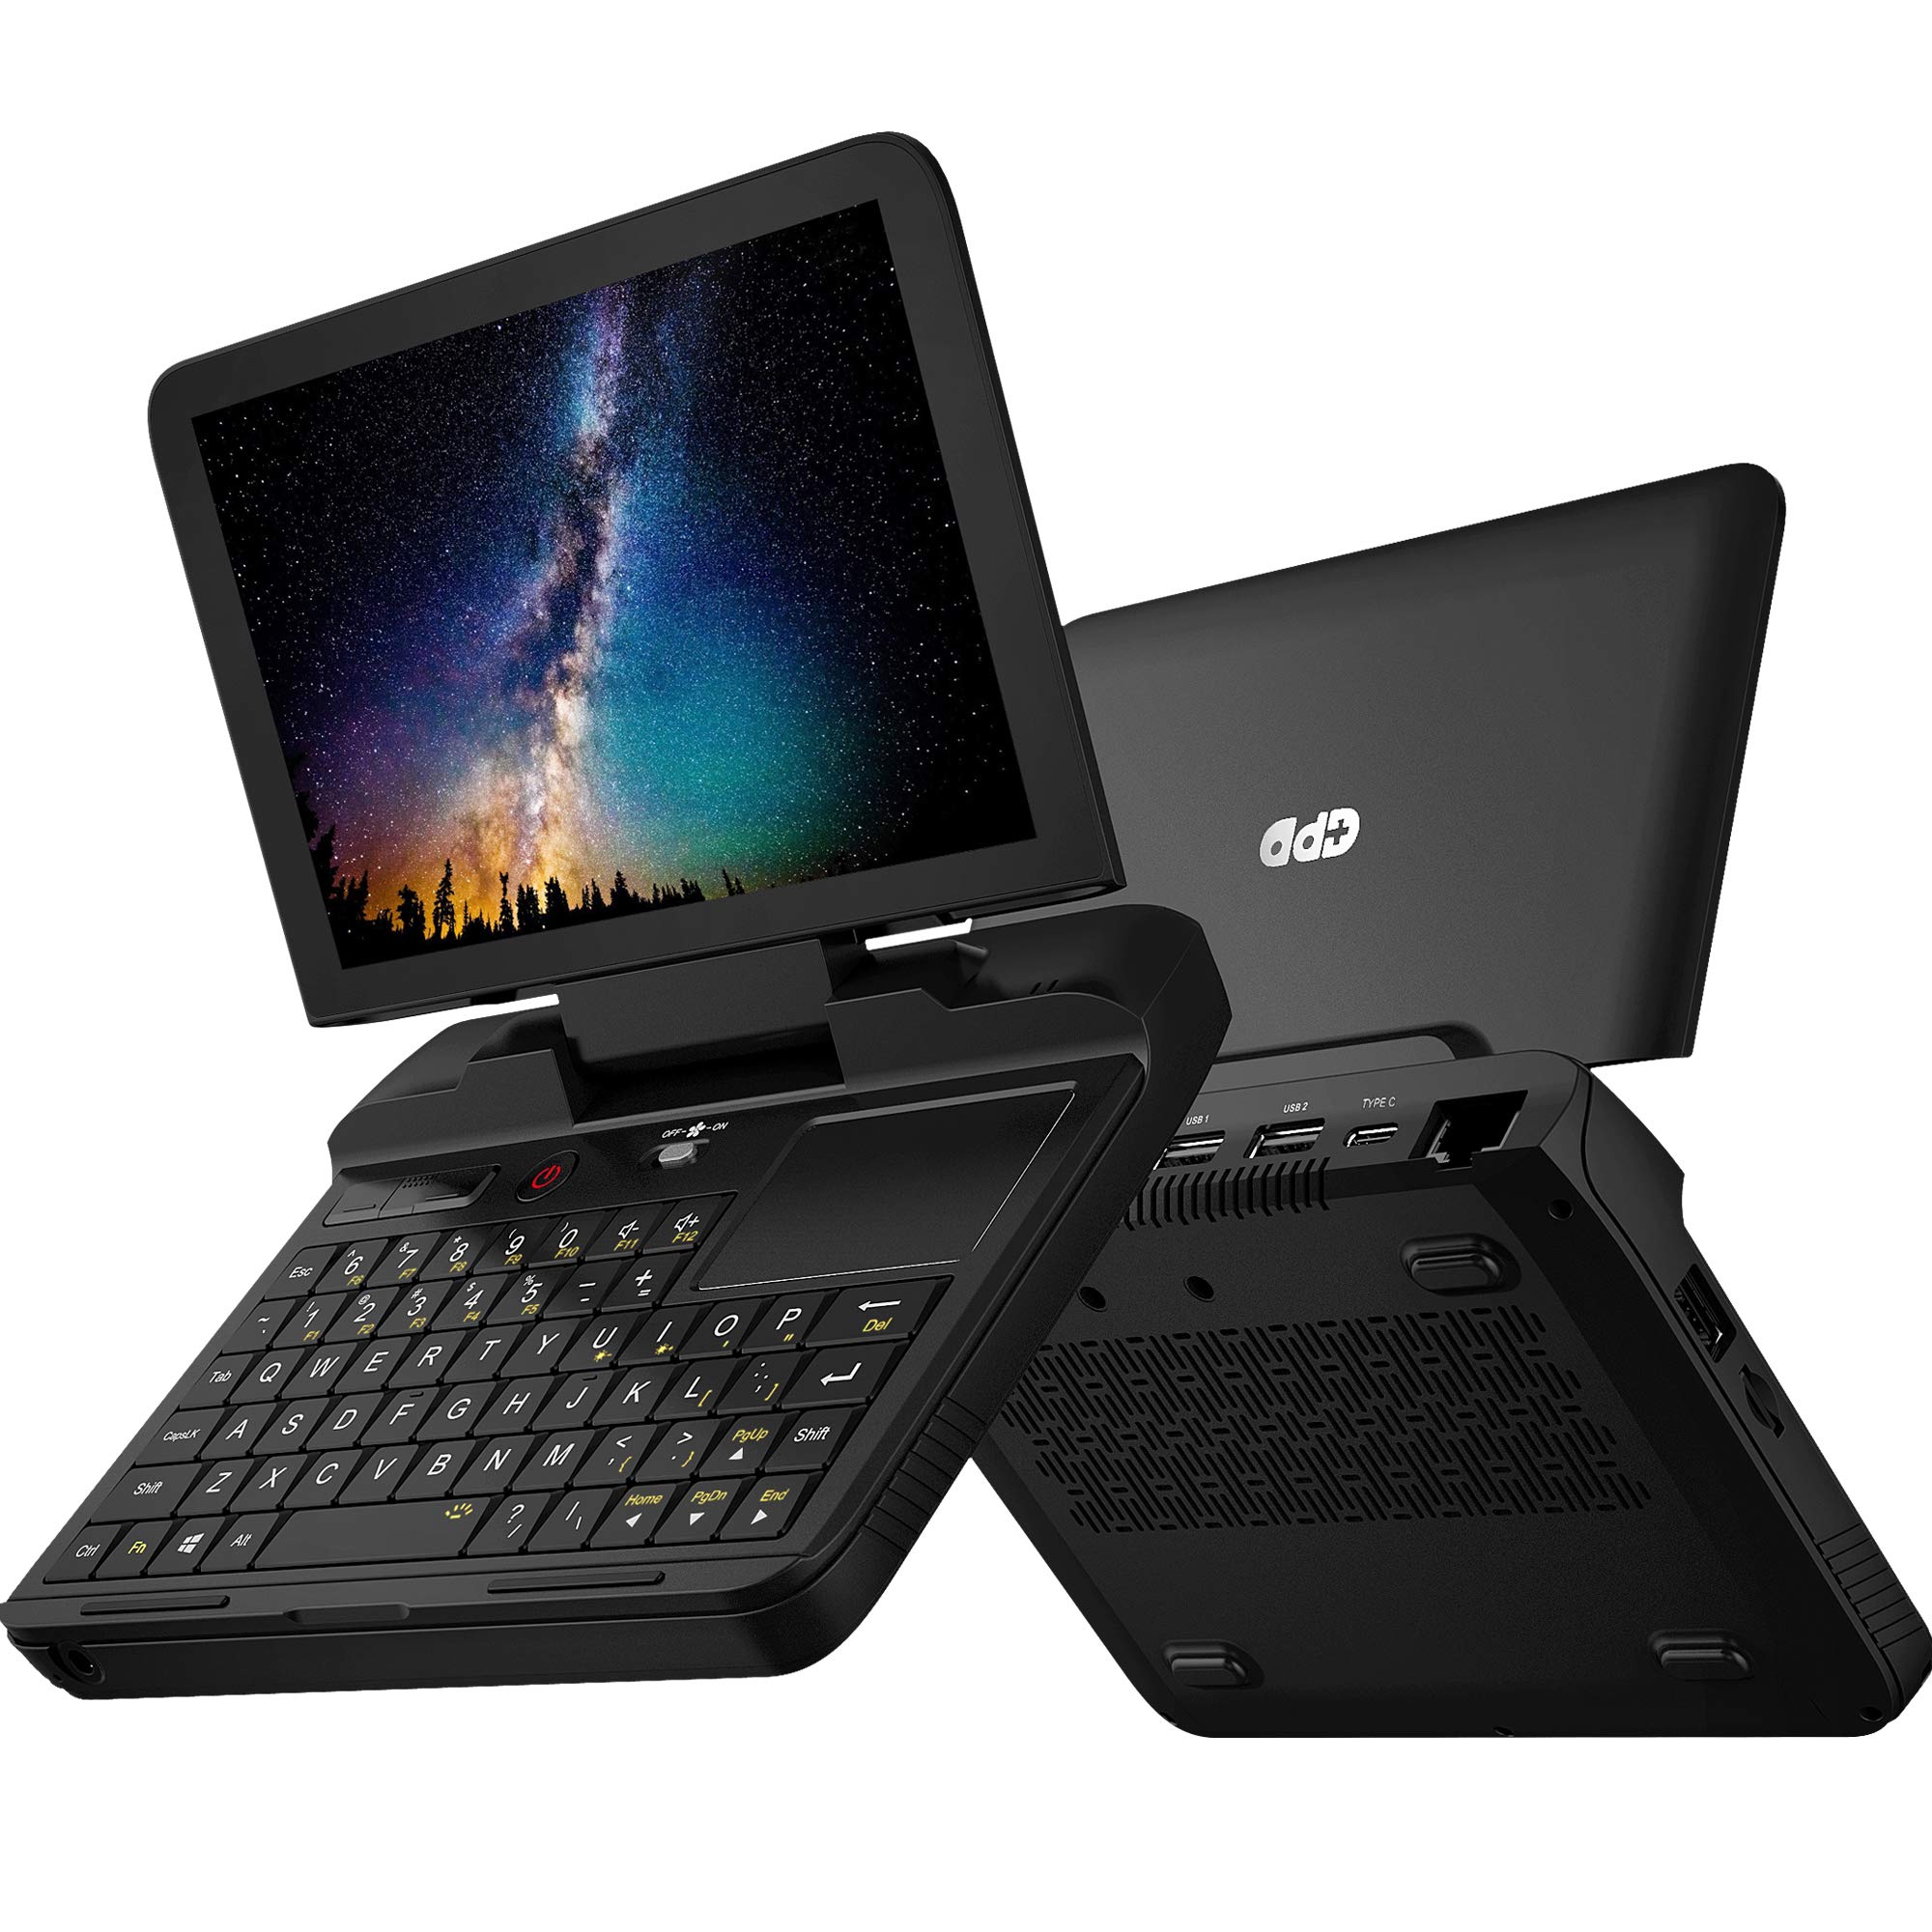 [1TB M.2 SSD Version] GPD Micro PC- 6 Inches Handheld Industry Laptop Mini PC Win 10 Pro,Pocket Mini Portable PC Computer Notebook,8GB RAM